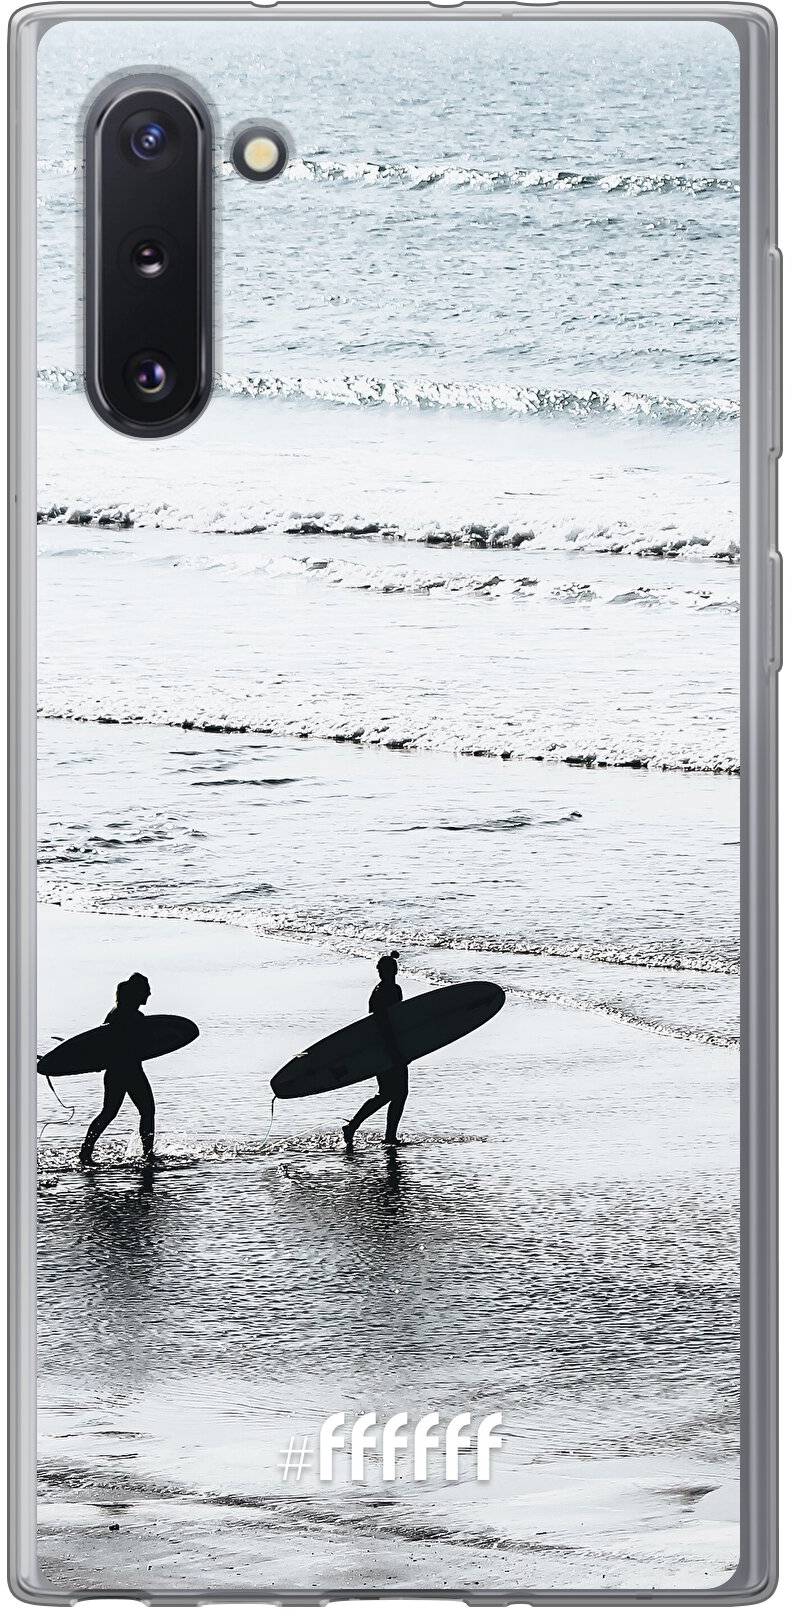 Surfing Galaxy Note 10